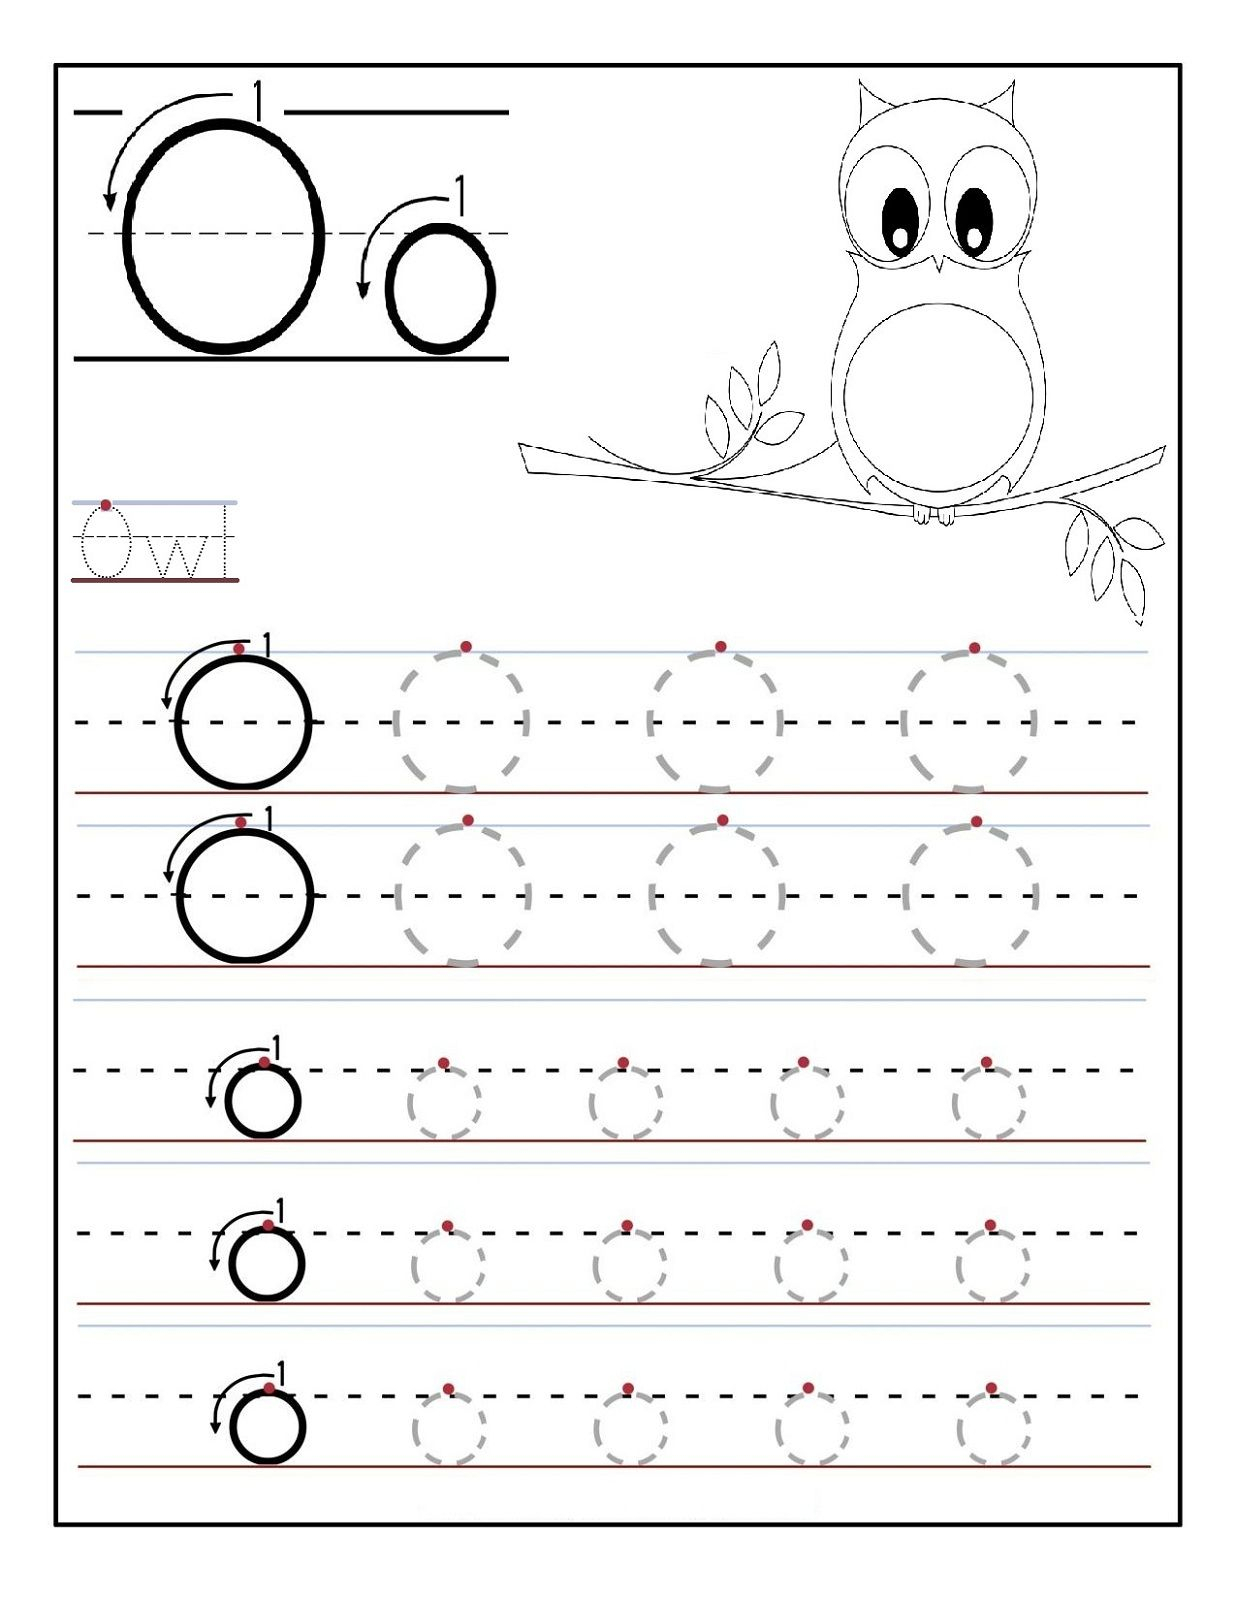 Letter O Worksheets For Preschool | Education-Craftwork in Letter O Worksheets Free Printable